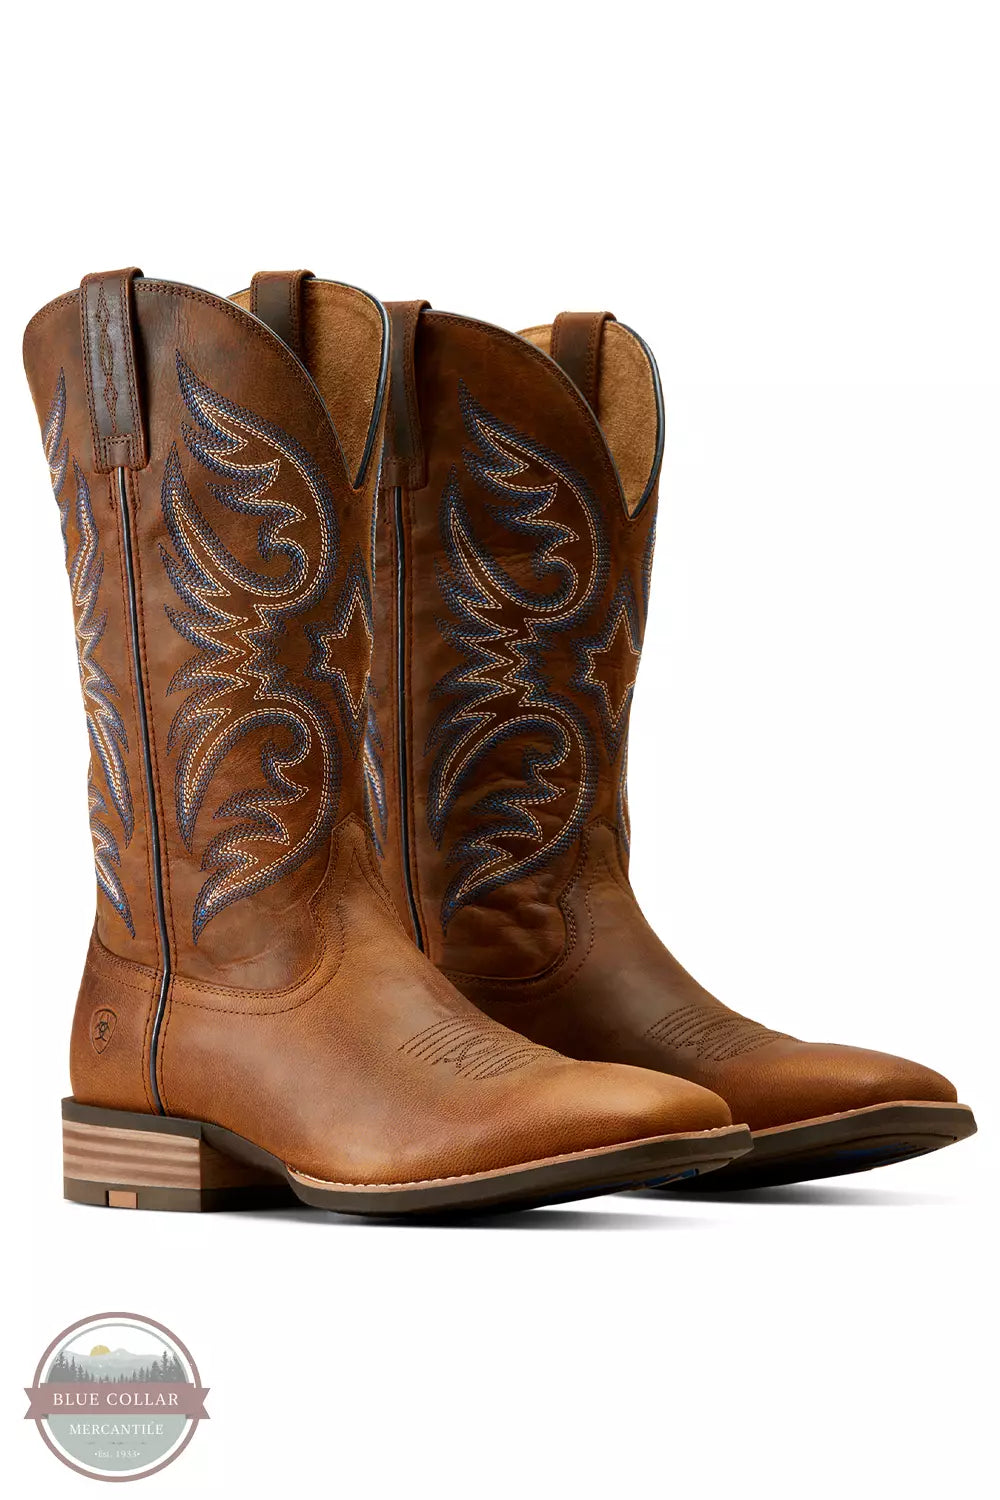 Ariat 10050938 Ricochet Cowboy Boots Pair Profile View